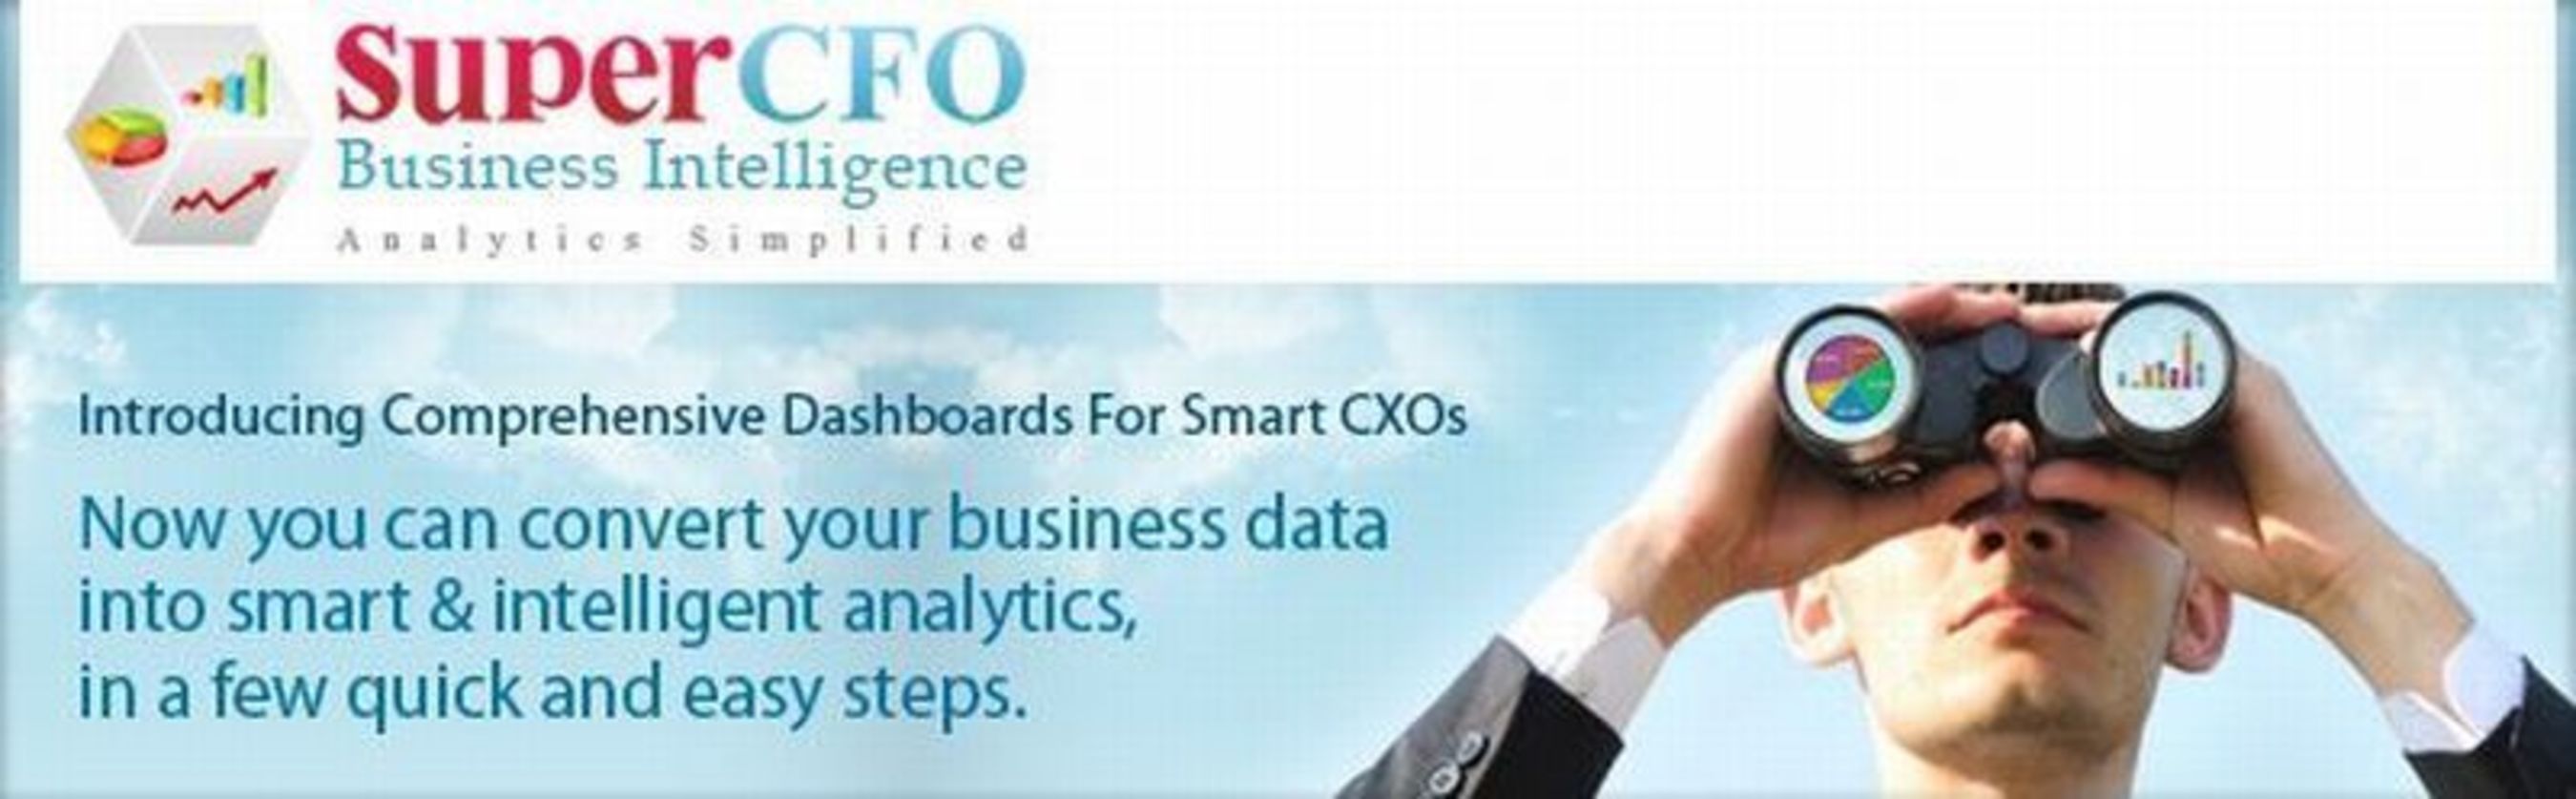 SuperCFO BI: Convert your business data in smart & intelligent analytics (PRNewsFoto/SuperCFO)